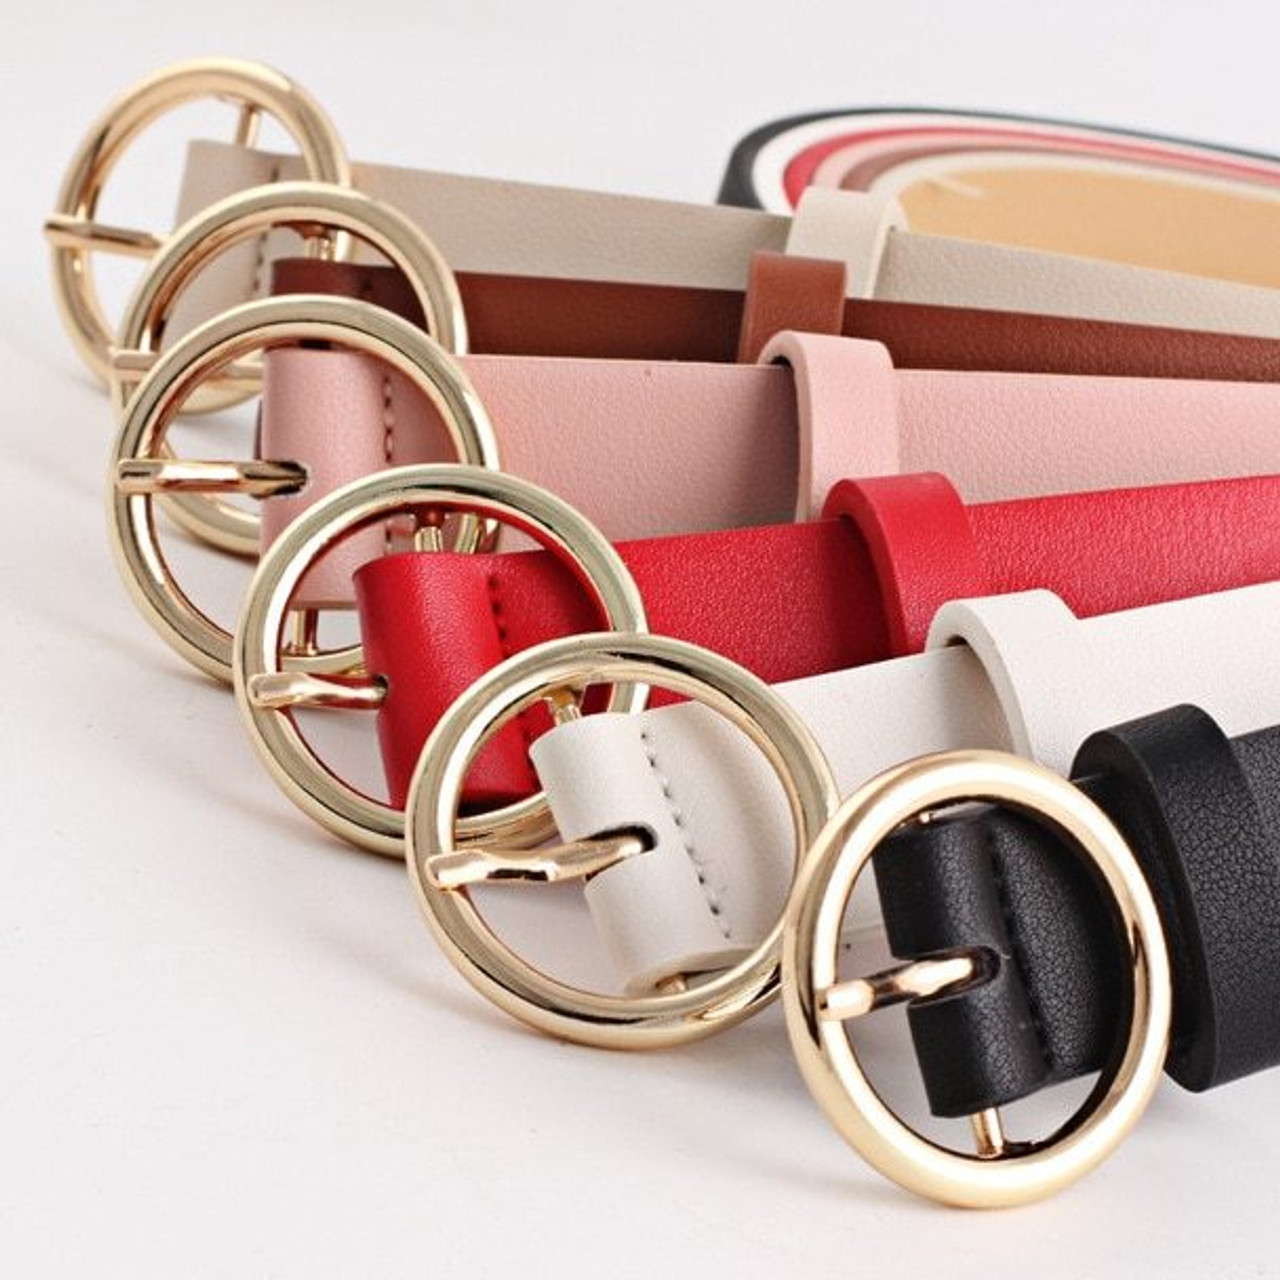 Red/Brown Single Roberto Verino belt discount 88% WOMEN FASHION Accessories Belt Red 